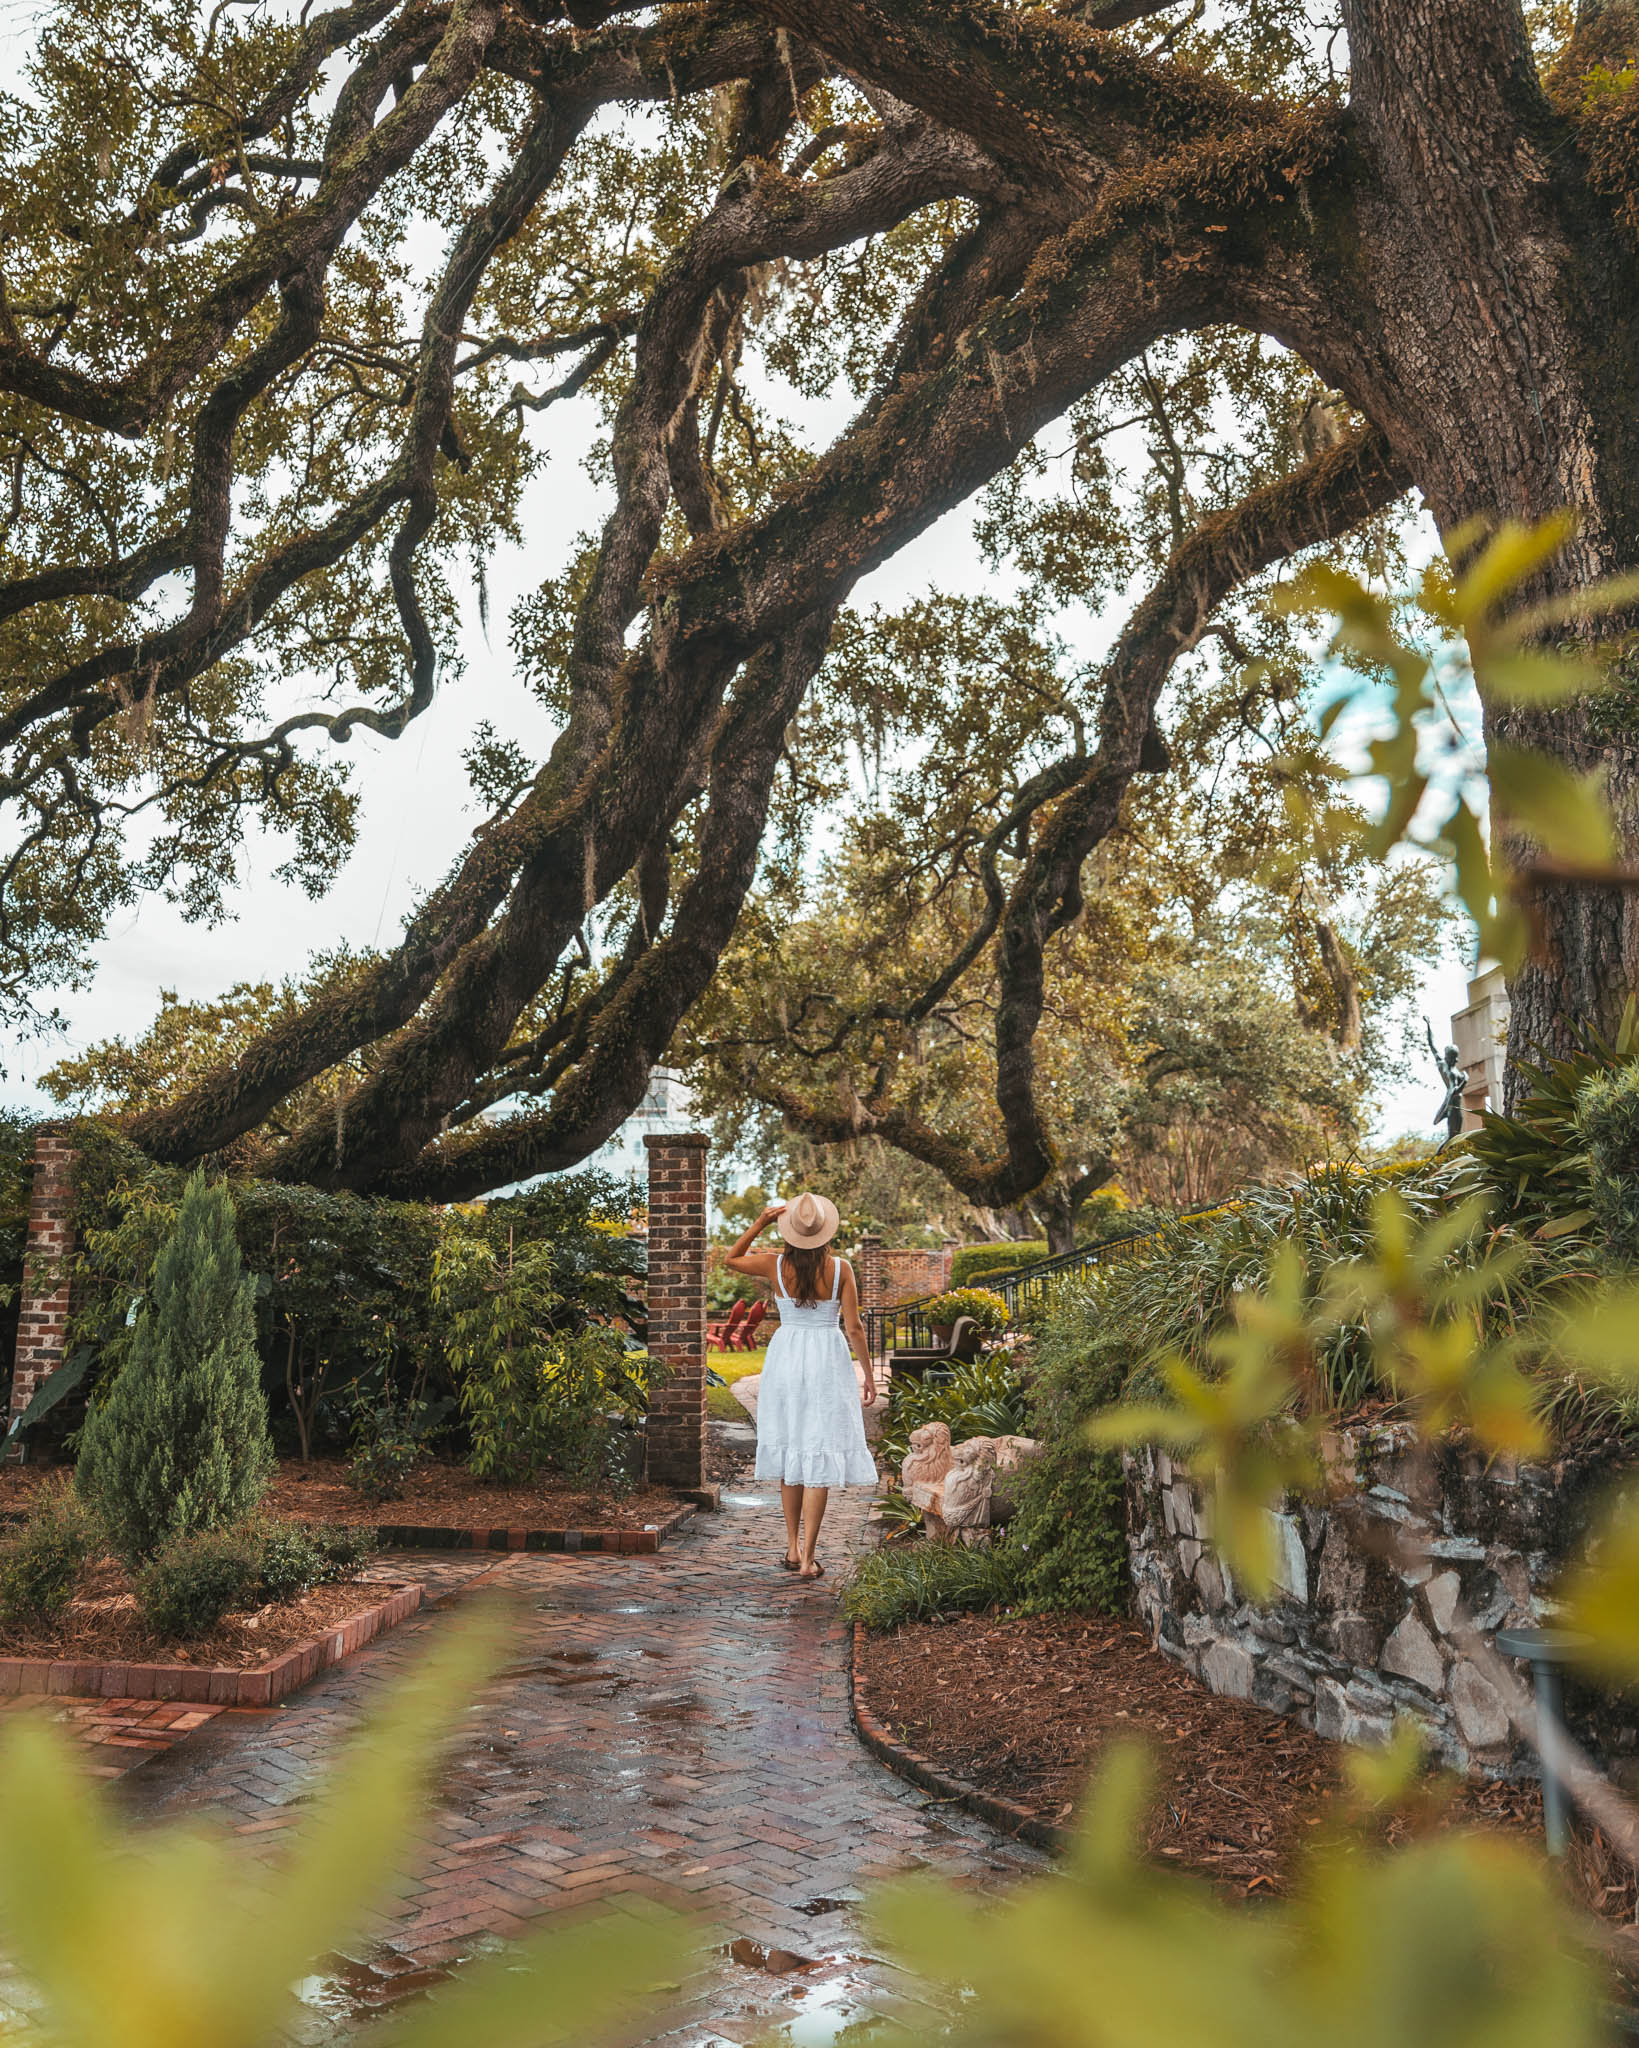 Cummer Museum gardens ~ Top Things to Do in Jacksonville, Florida ~ #readysetjetset #florida #jax #jacksonville #blogpost #travel